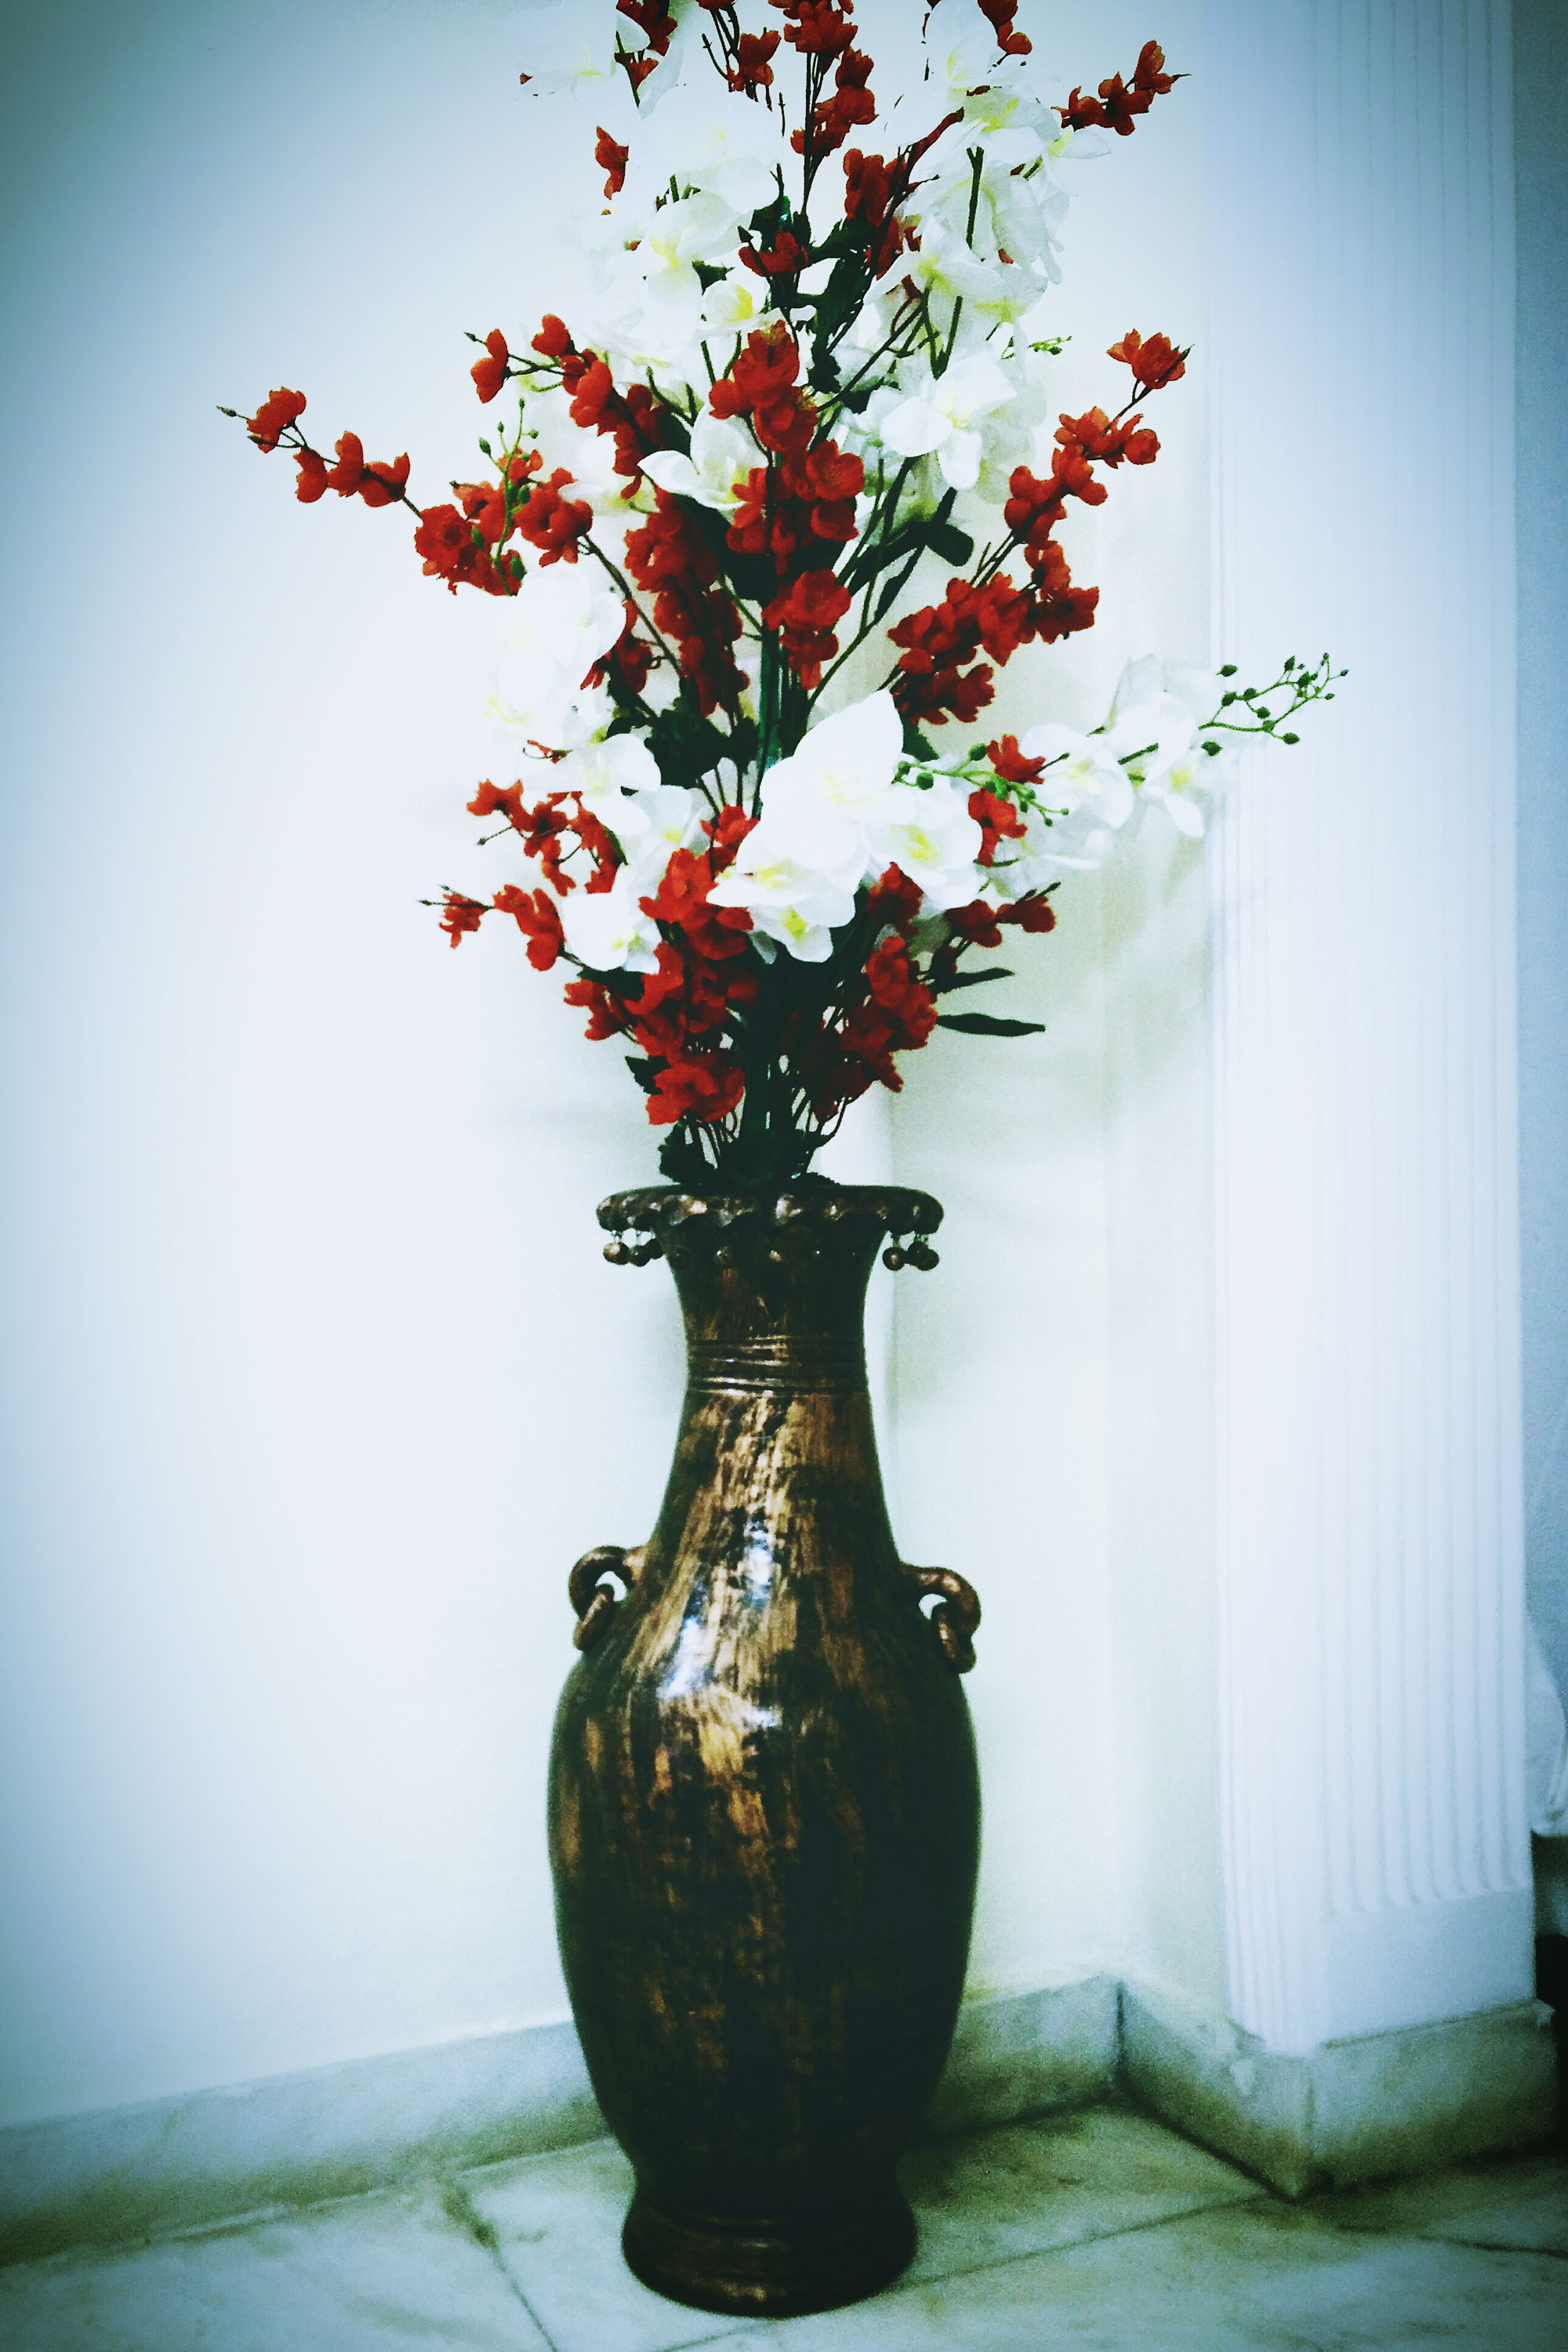 Tall Flower vase on floor